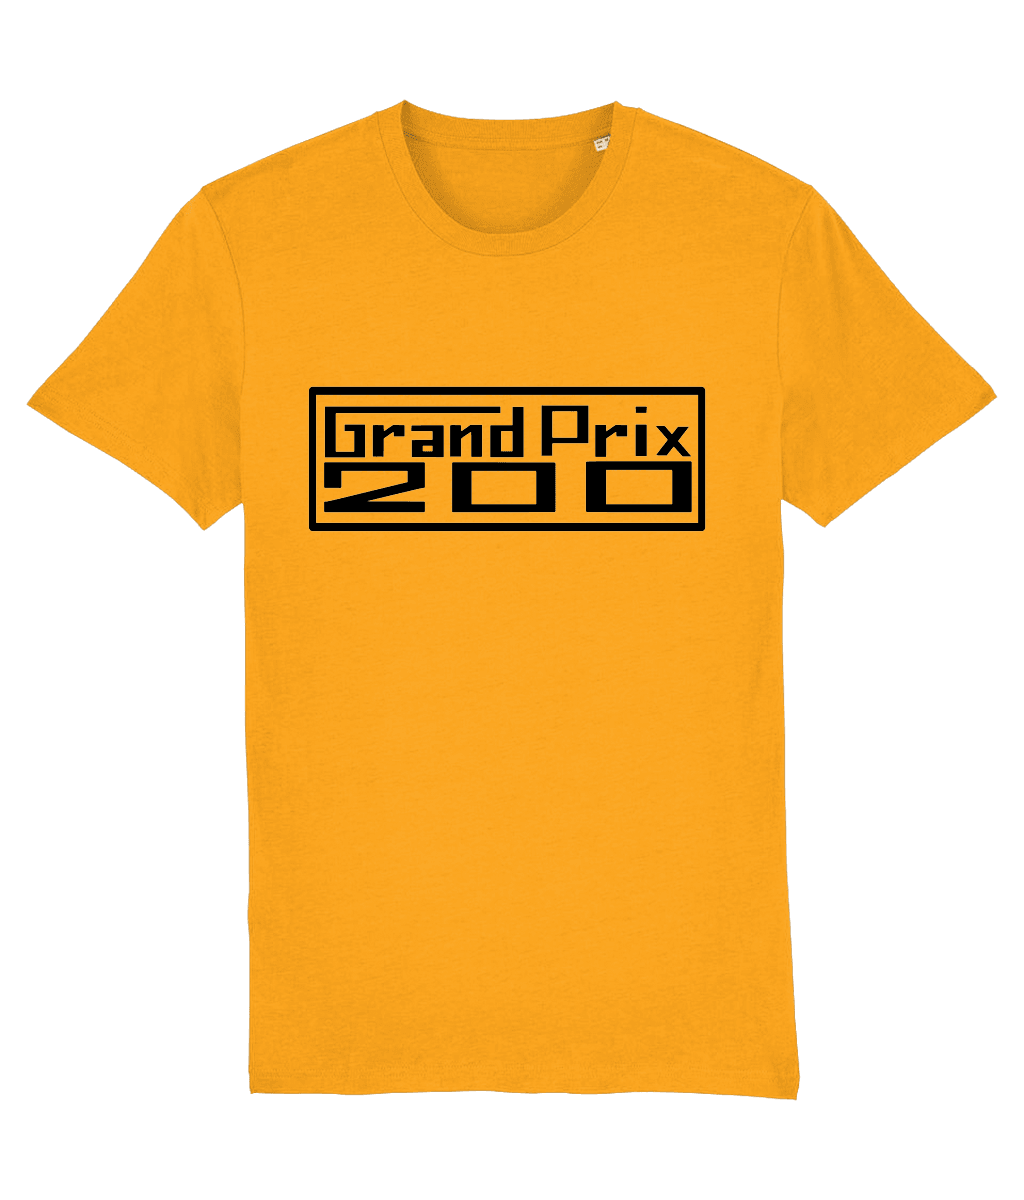 GRAND PRIX TS1 225: T-Shirt Inspired by Classic Lambretta Scooters (5 Lambretta Colour Options) Small to 3XL (Copy) - SOUND IS COLOUR